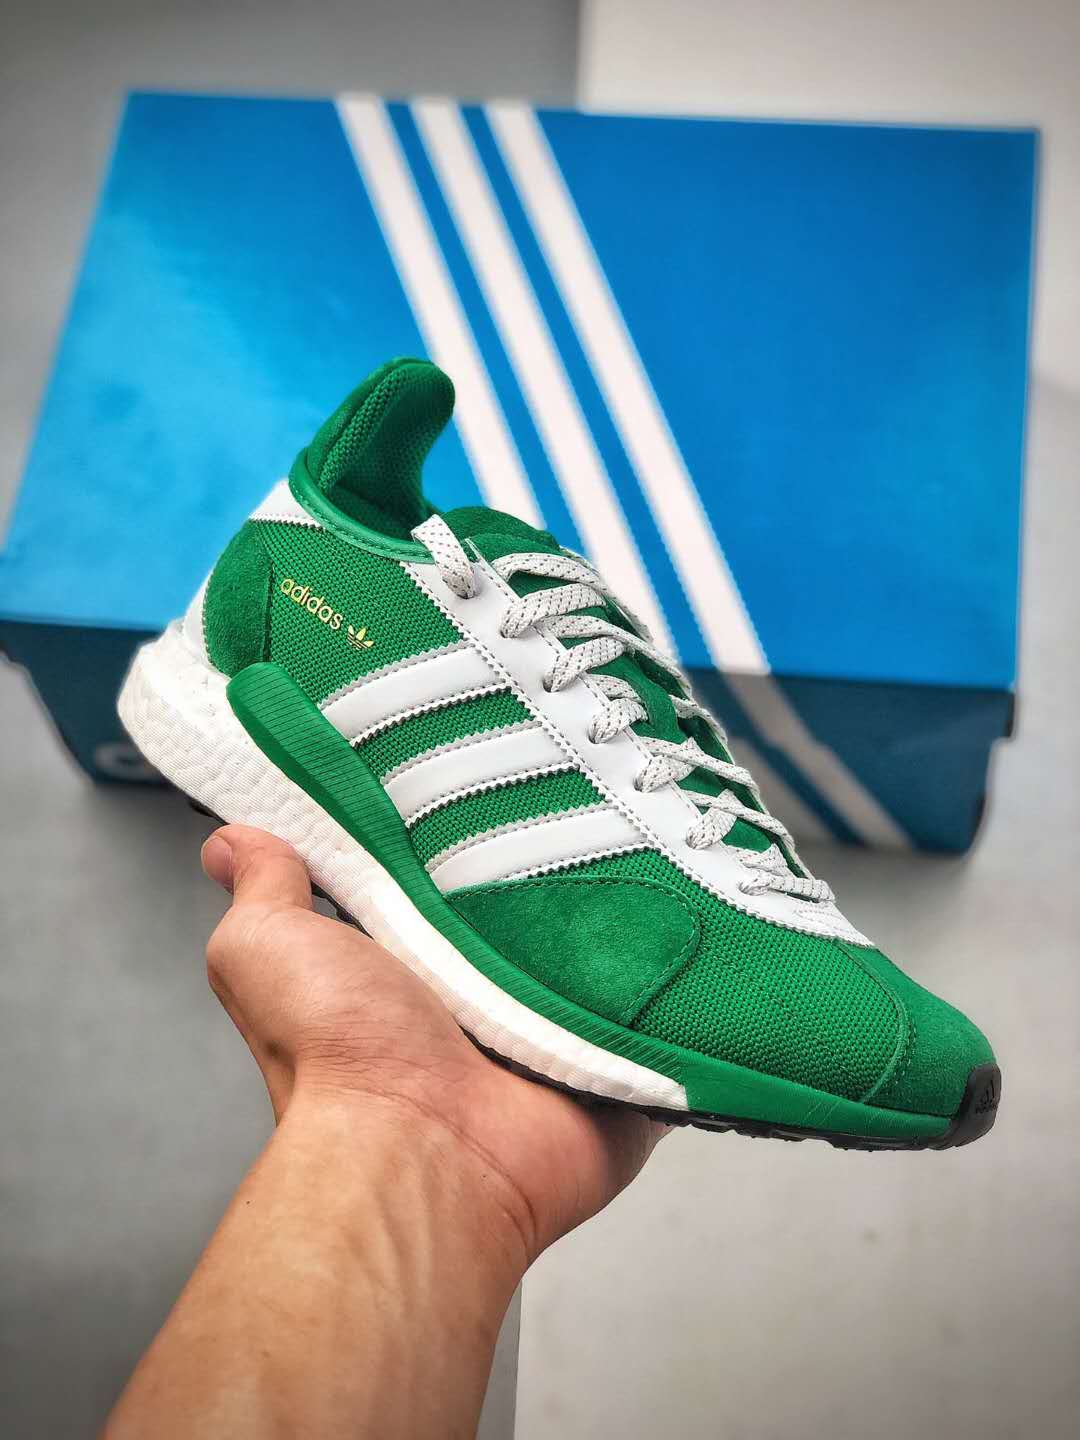 Adidas Human Made x Tokio Solar Green FZ0550 | Limited Edition Collaboration Sneakers